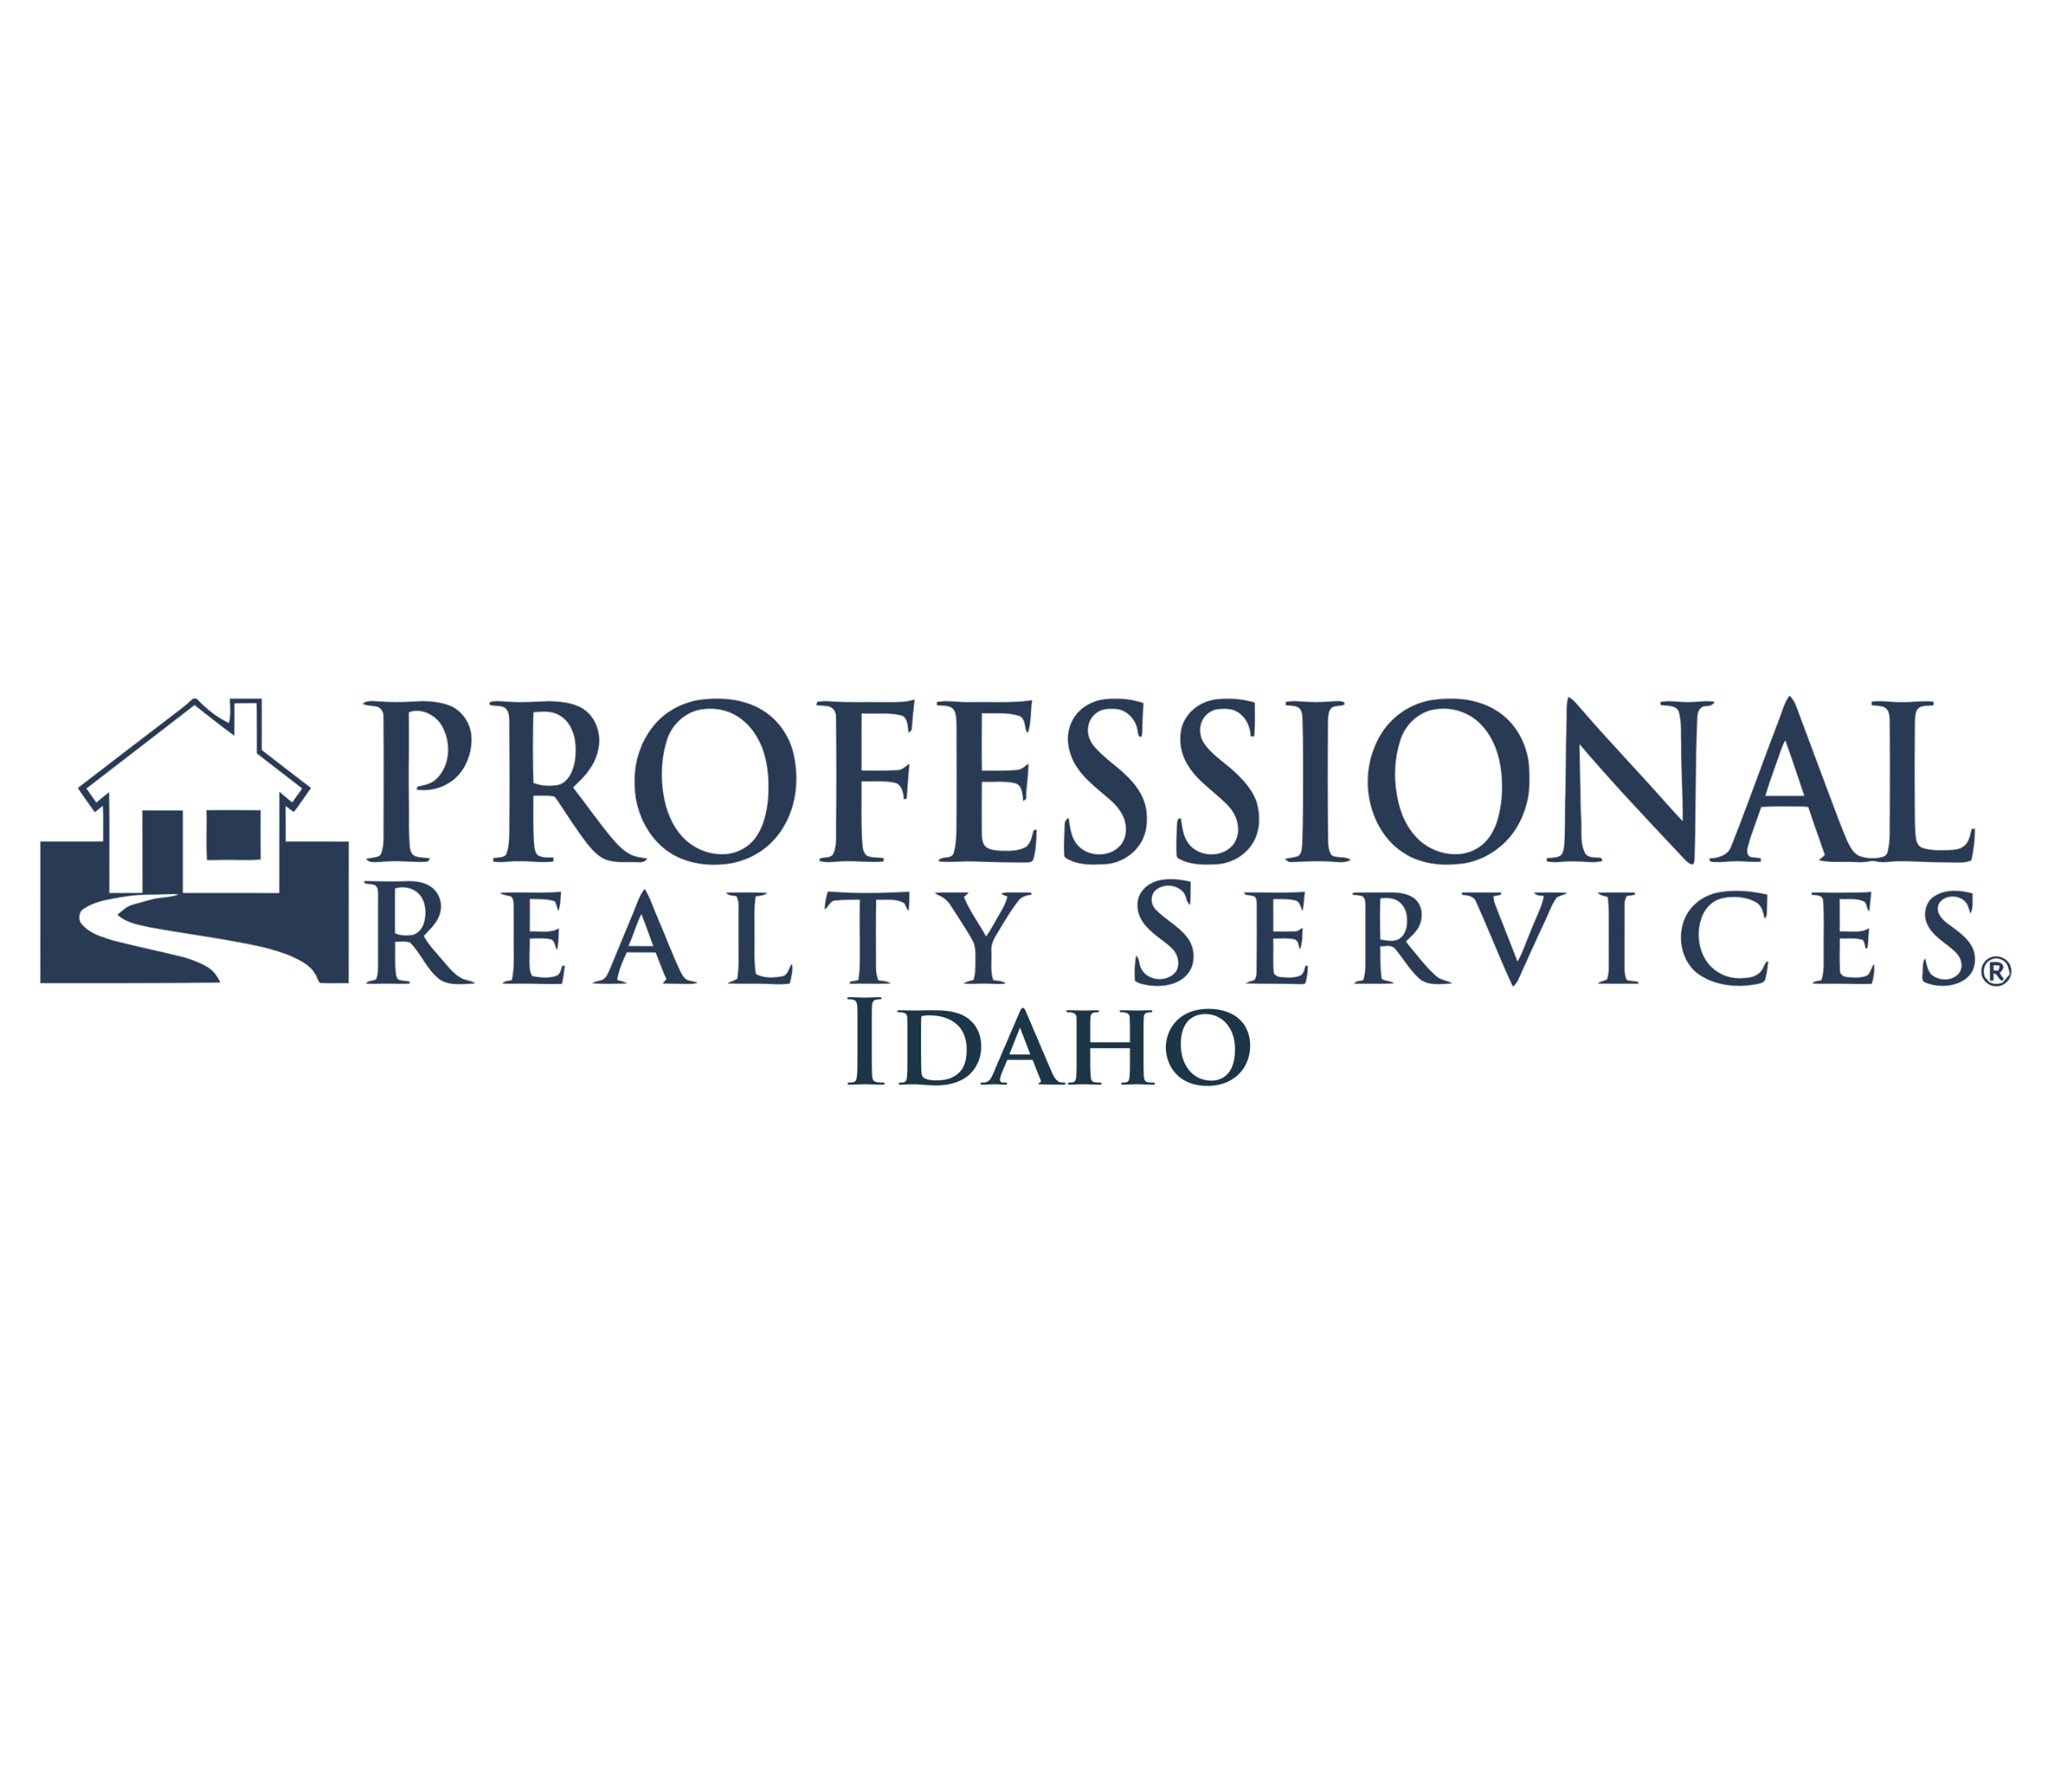 Professional Realty Services Idaho